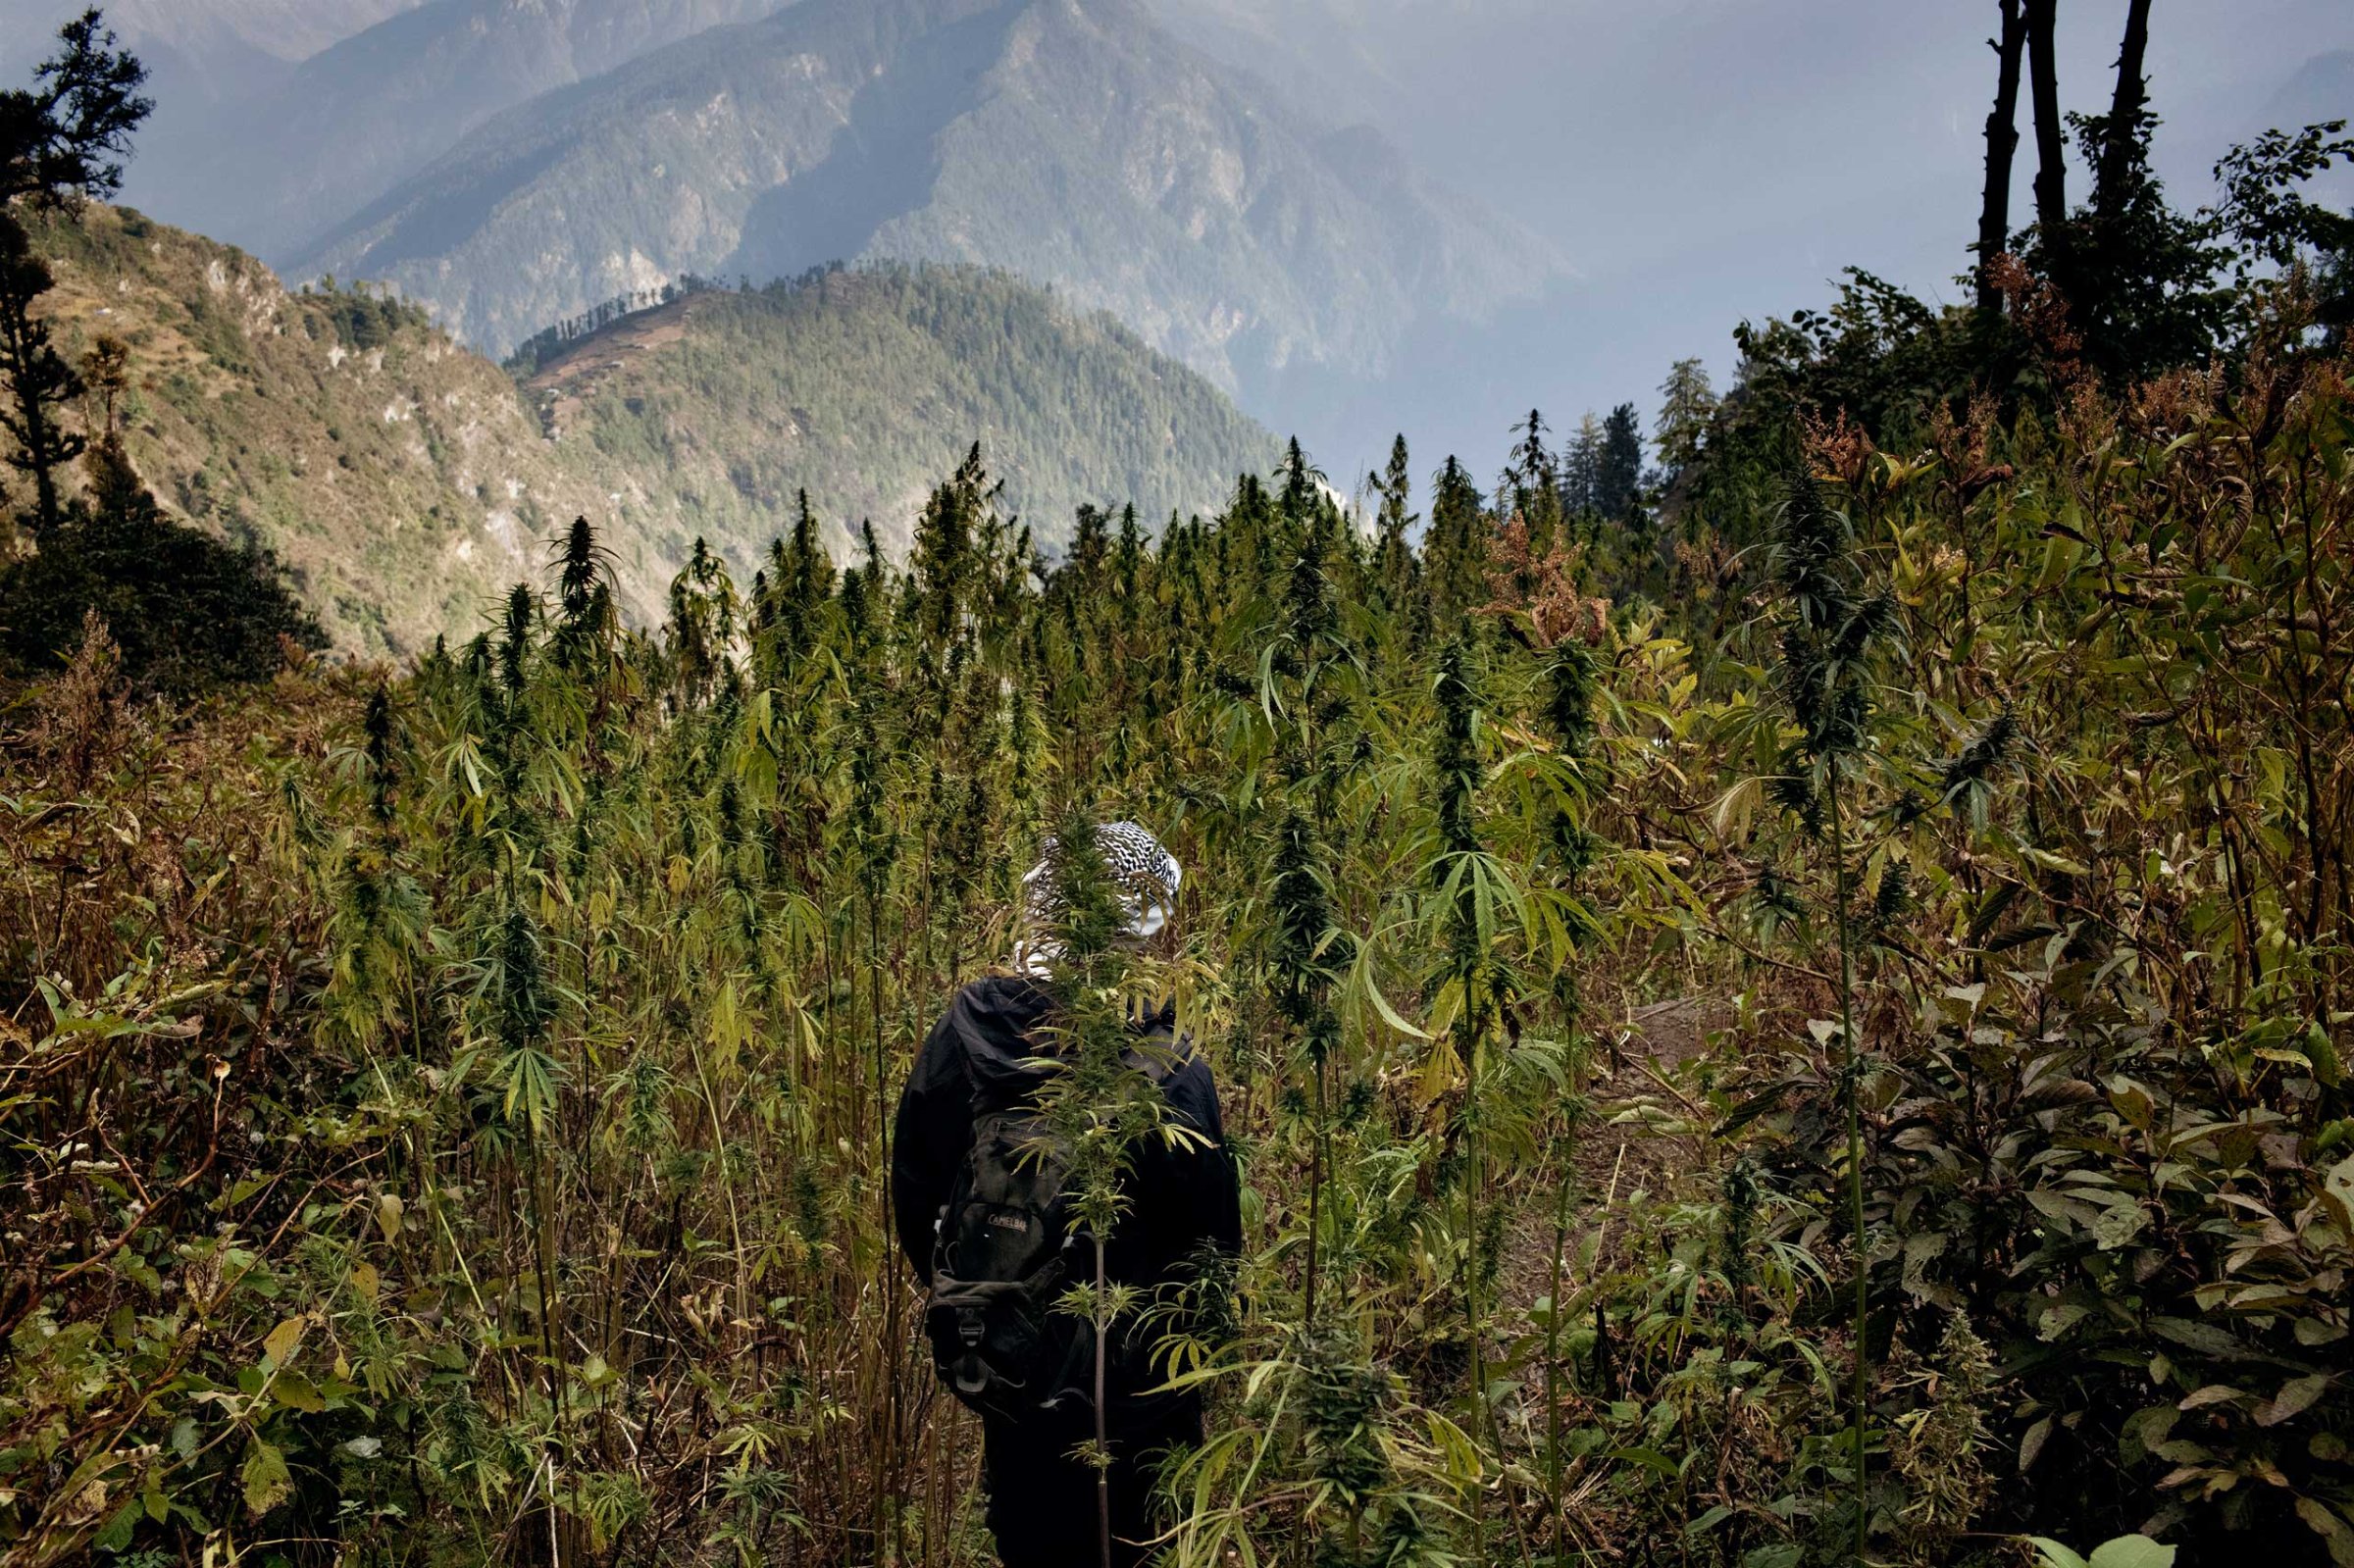 A villager walks through a cannabis field in Oct. 2013.